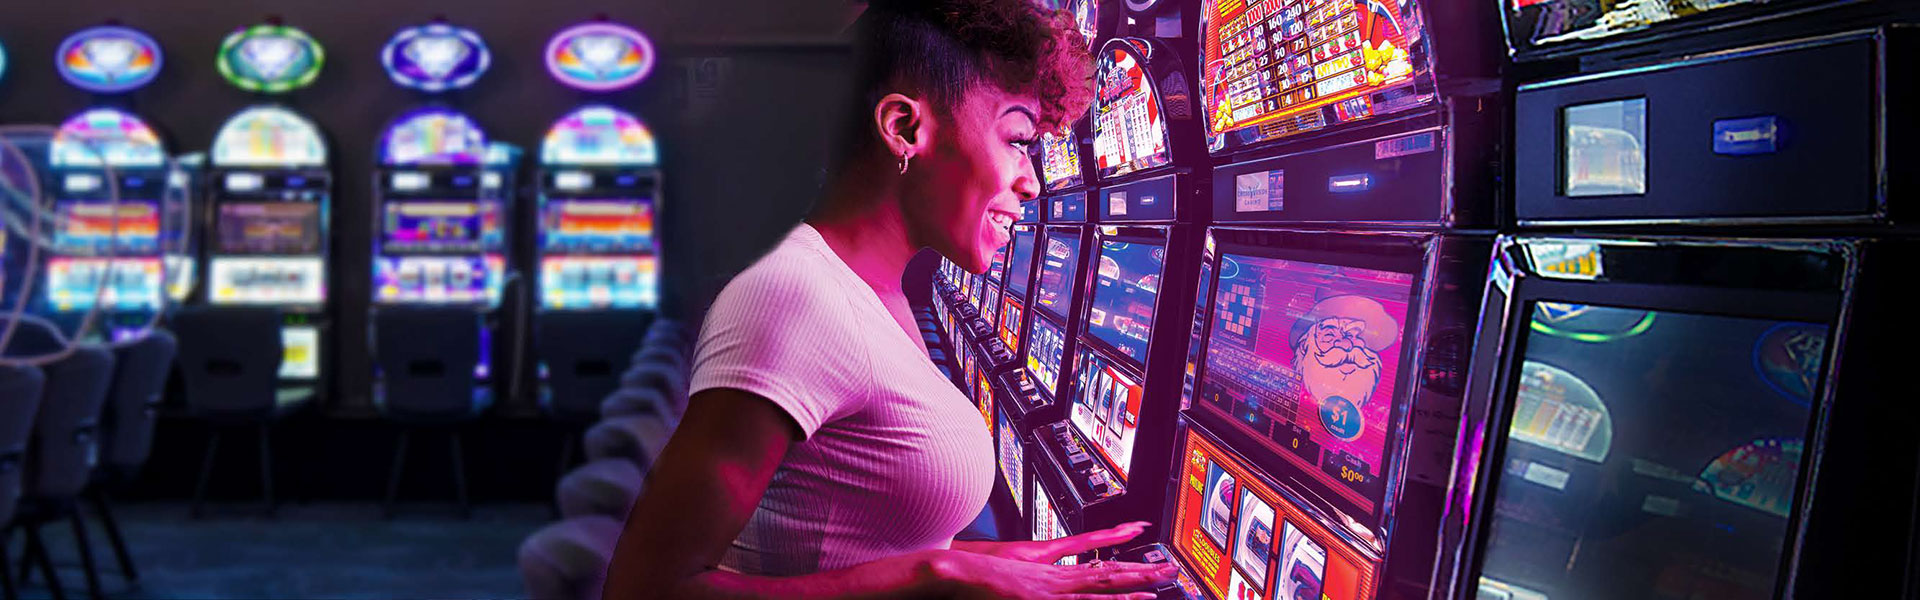 Woman at slot machine